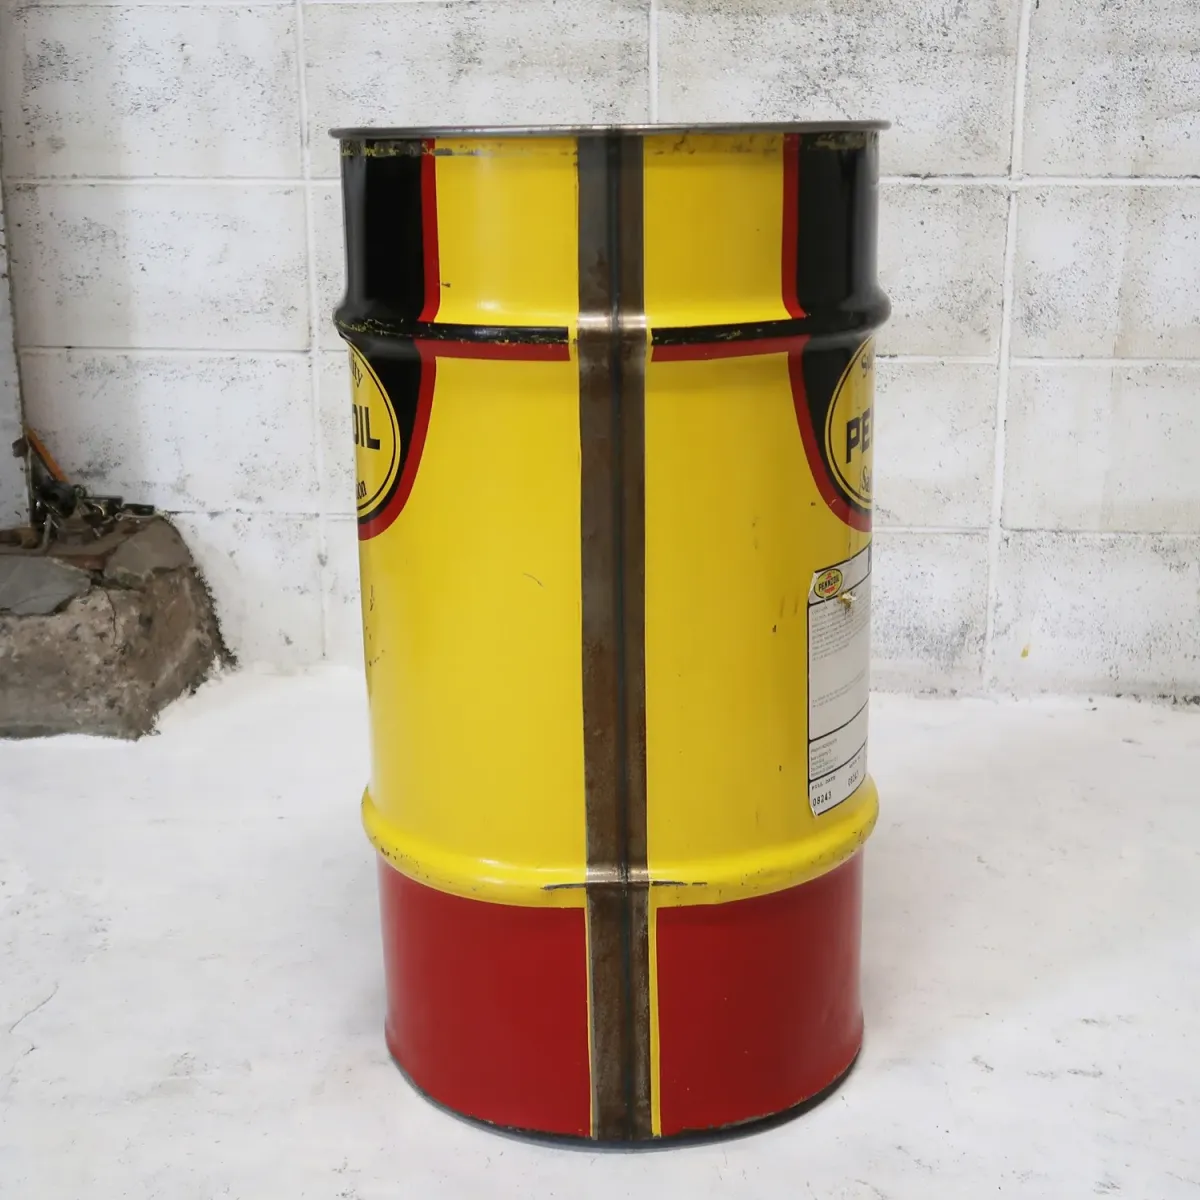 PENNZOIL ドラム缶